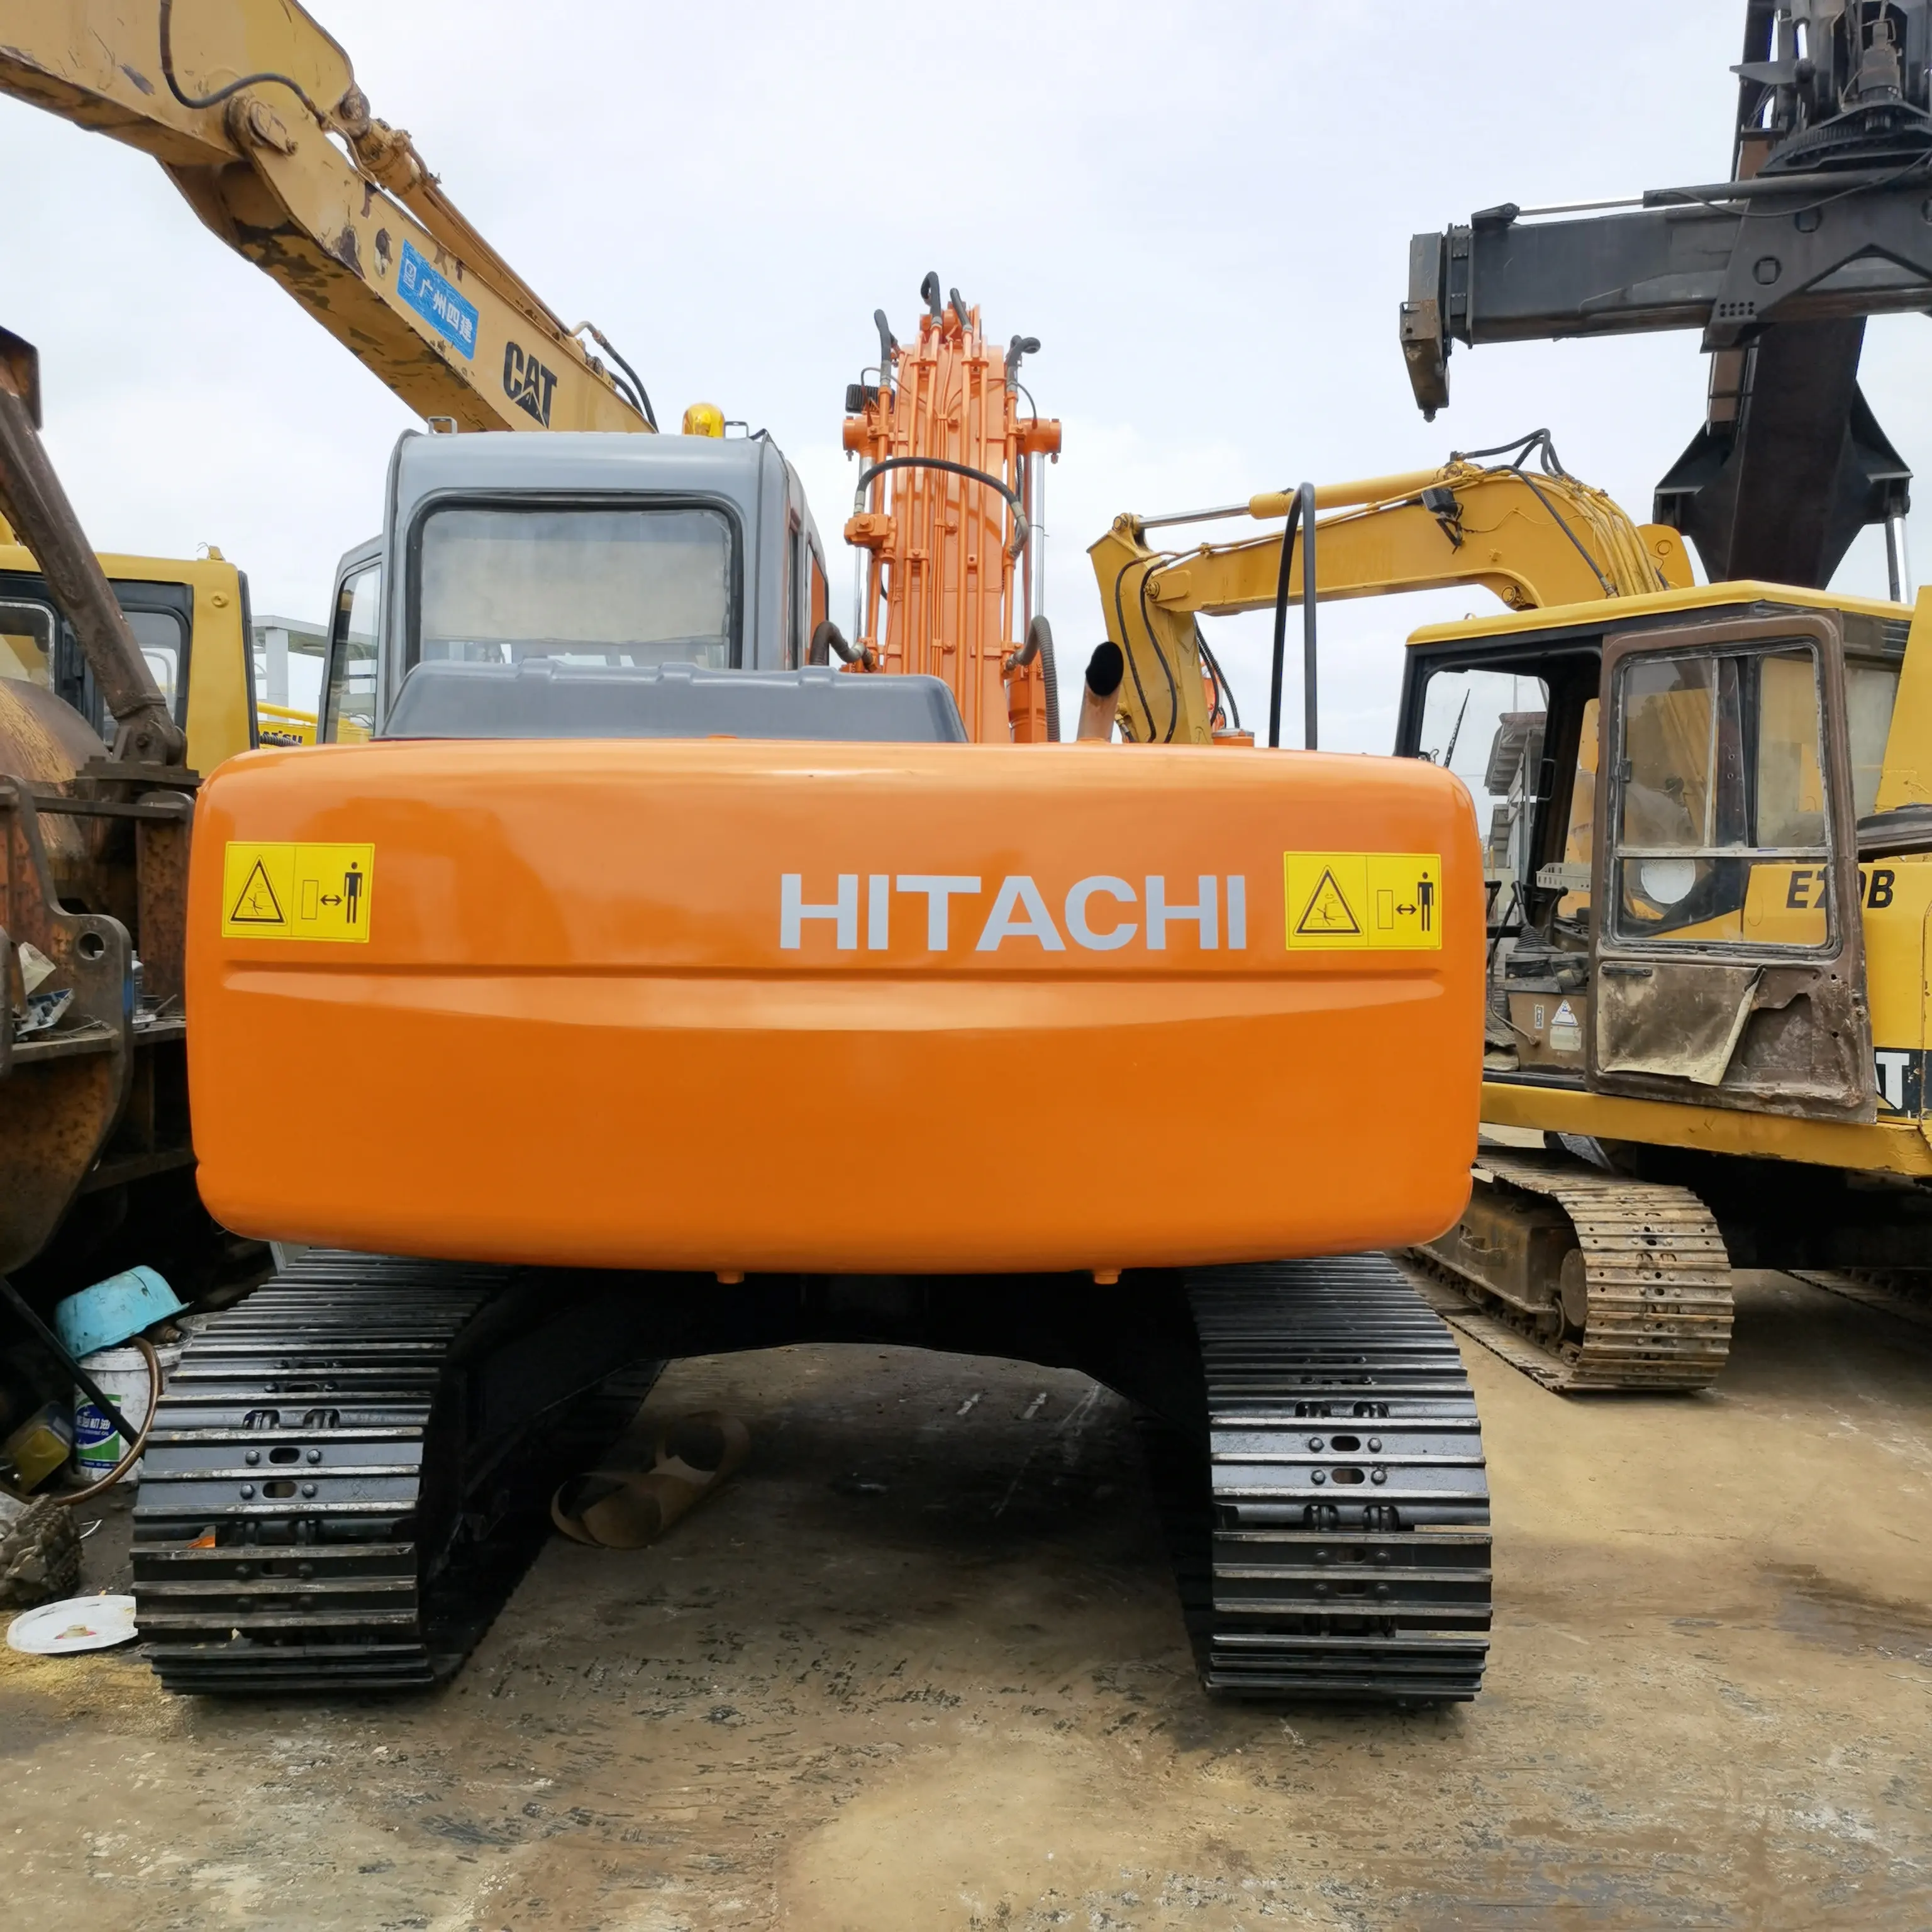 Original Japan Hitachi ZX120 Excavator Hitachi Excavator In Low Price Used Hitachi Excavator For Hot Sale